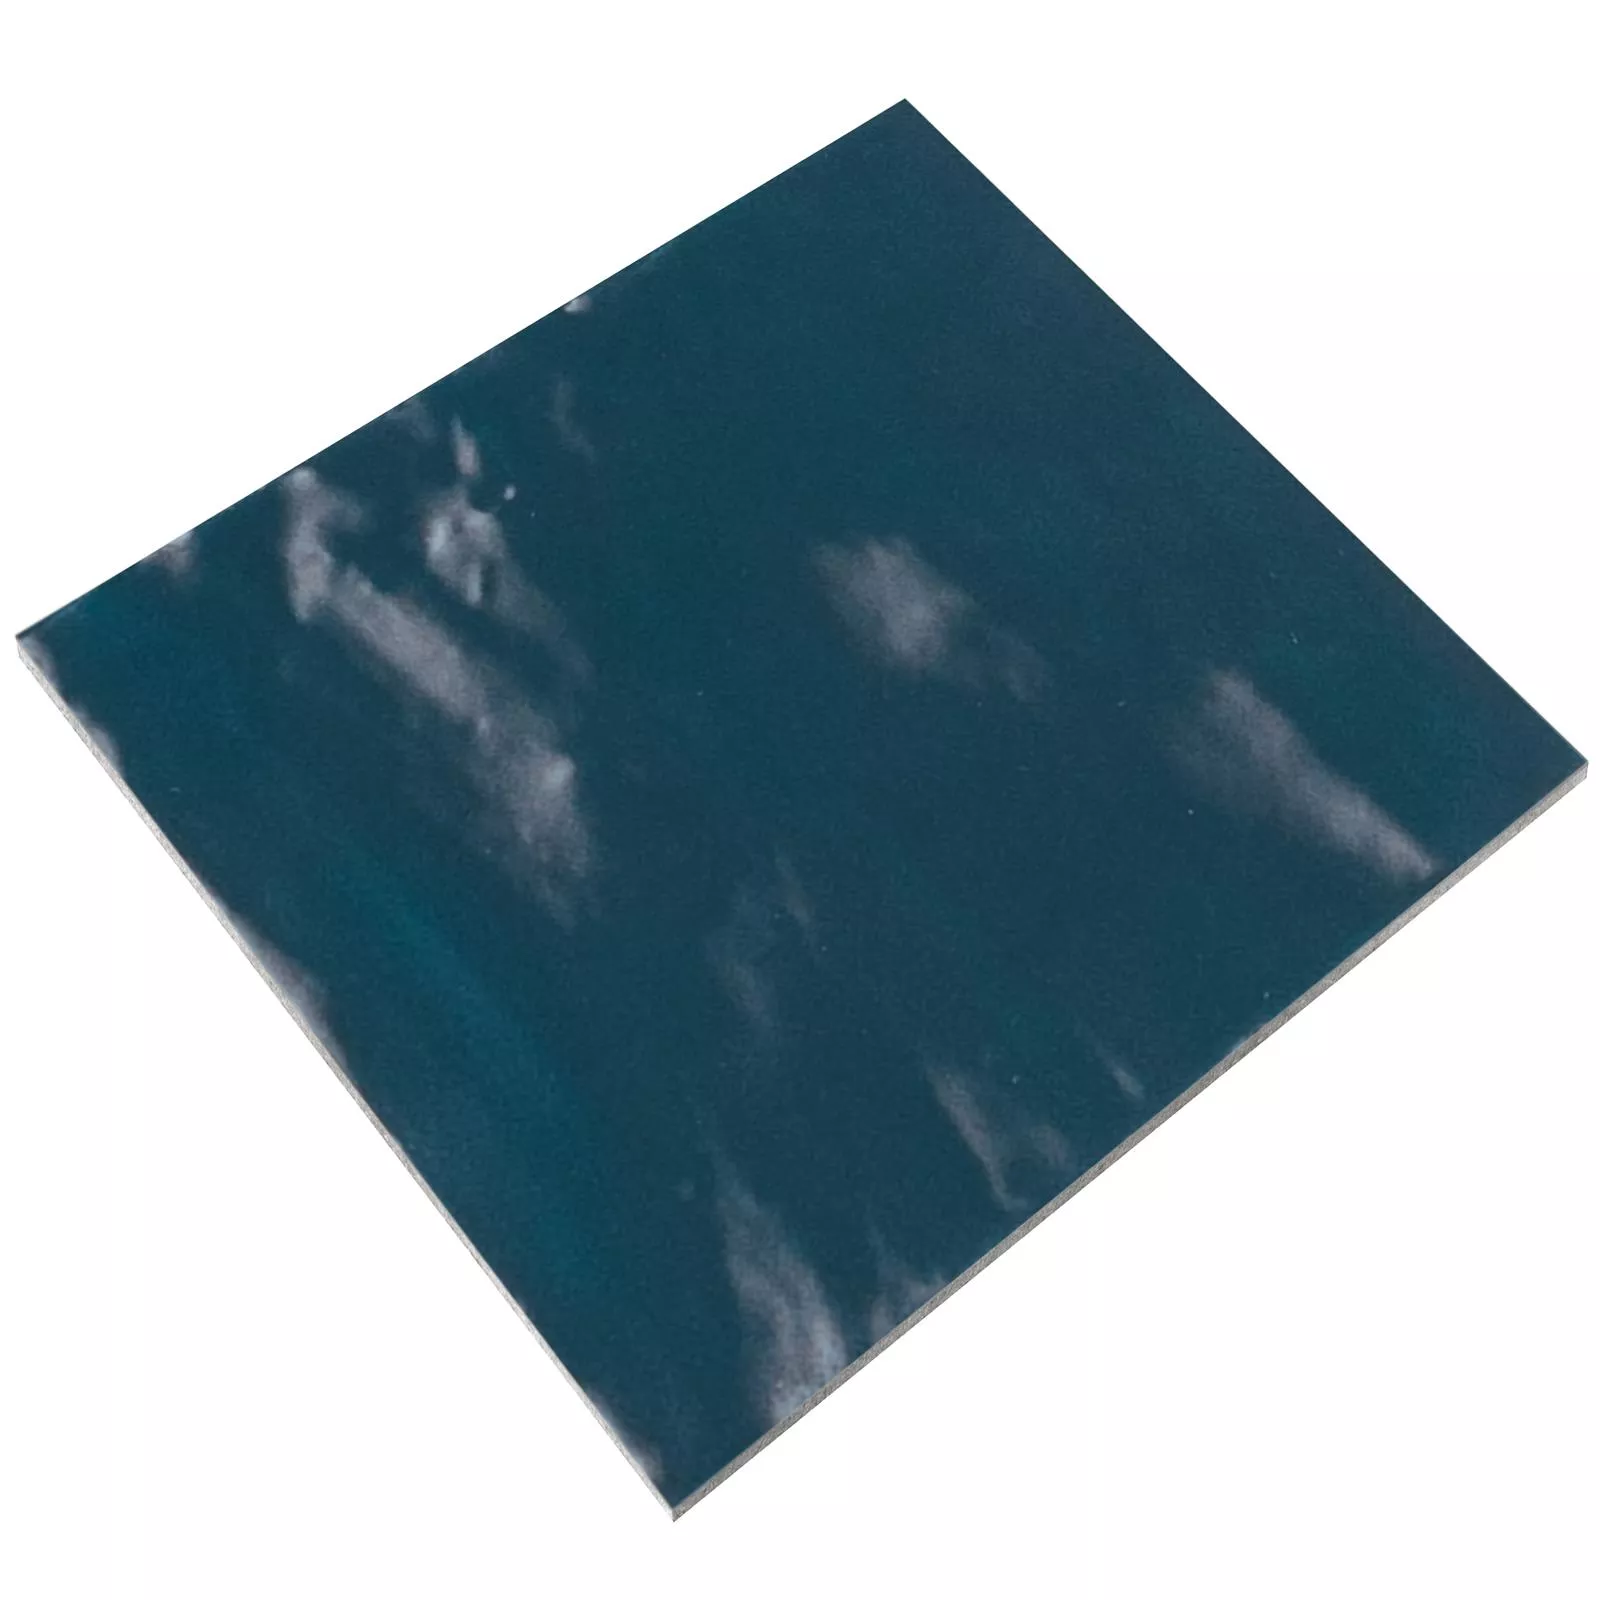 Sample Wandtegels Marbella Gegolfd 15x15cm Blauw